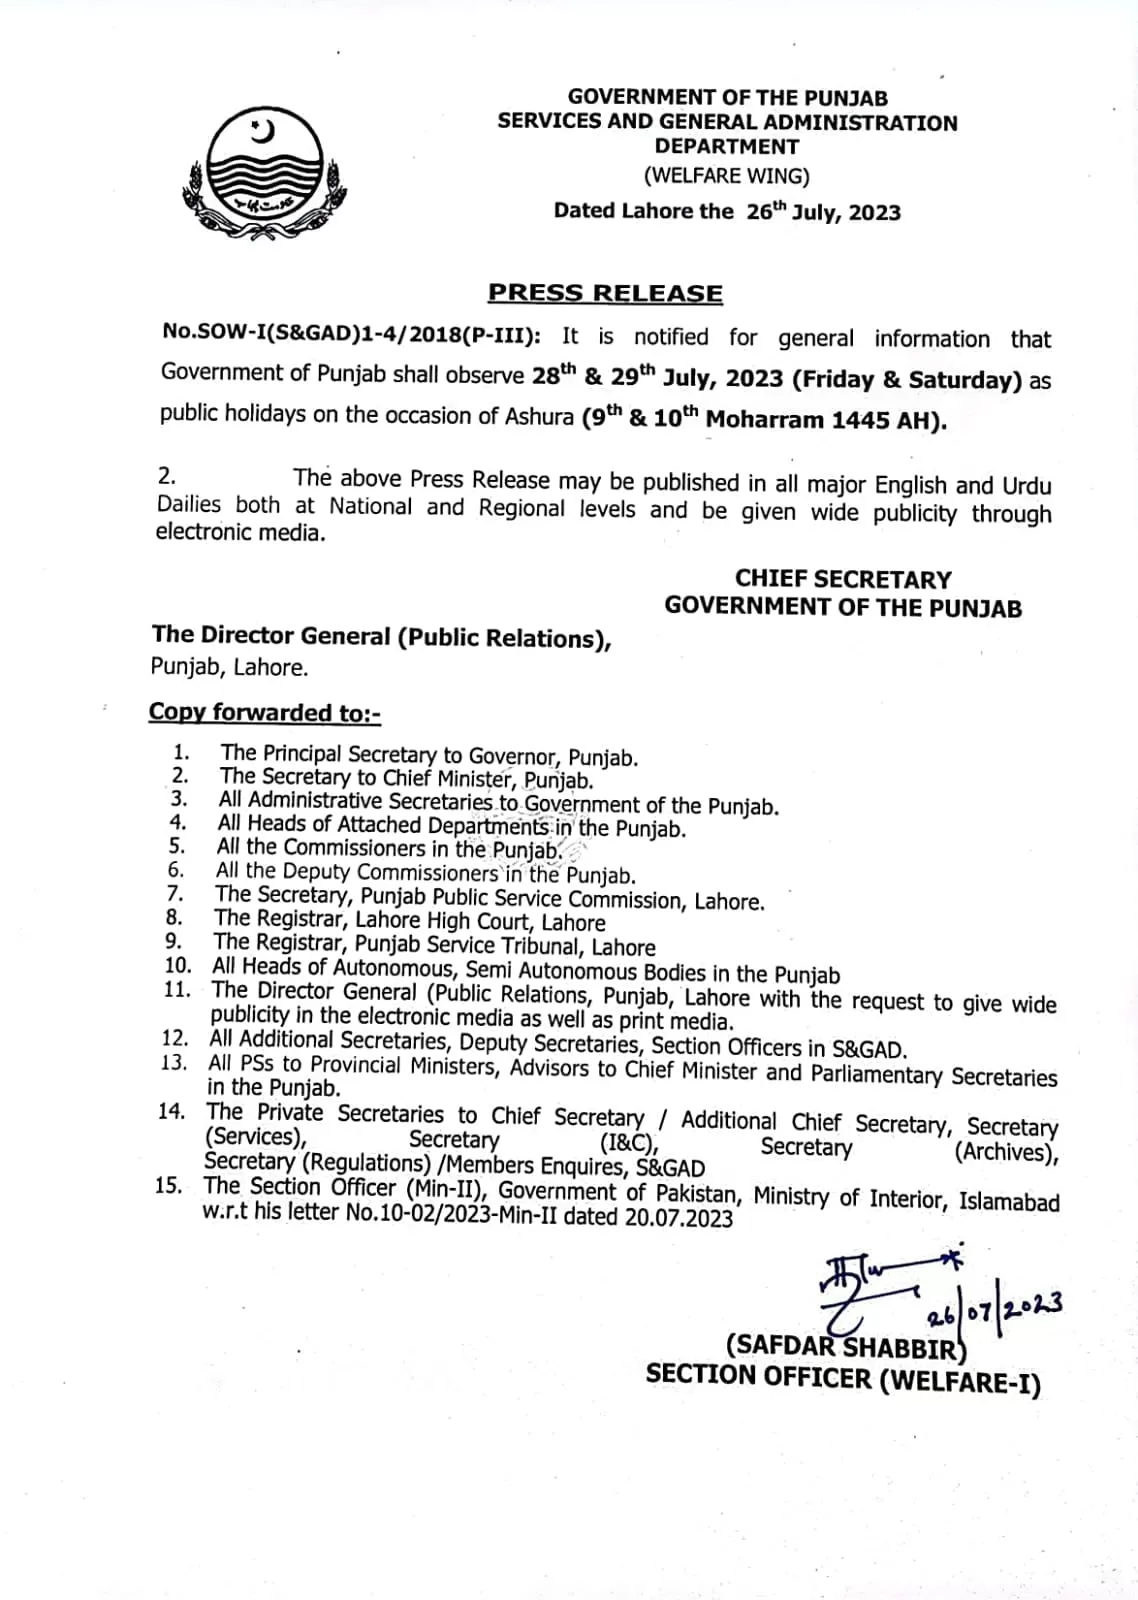 Public Holidays for Ashura Punjab 9th &10th Muharram 2023